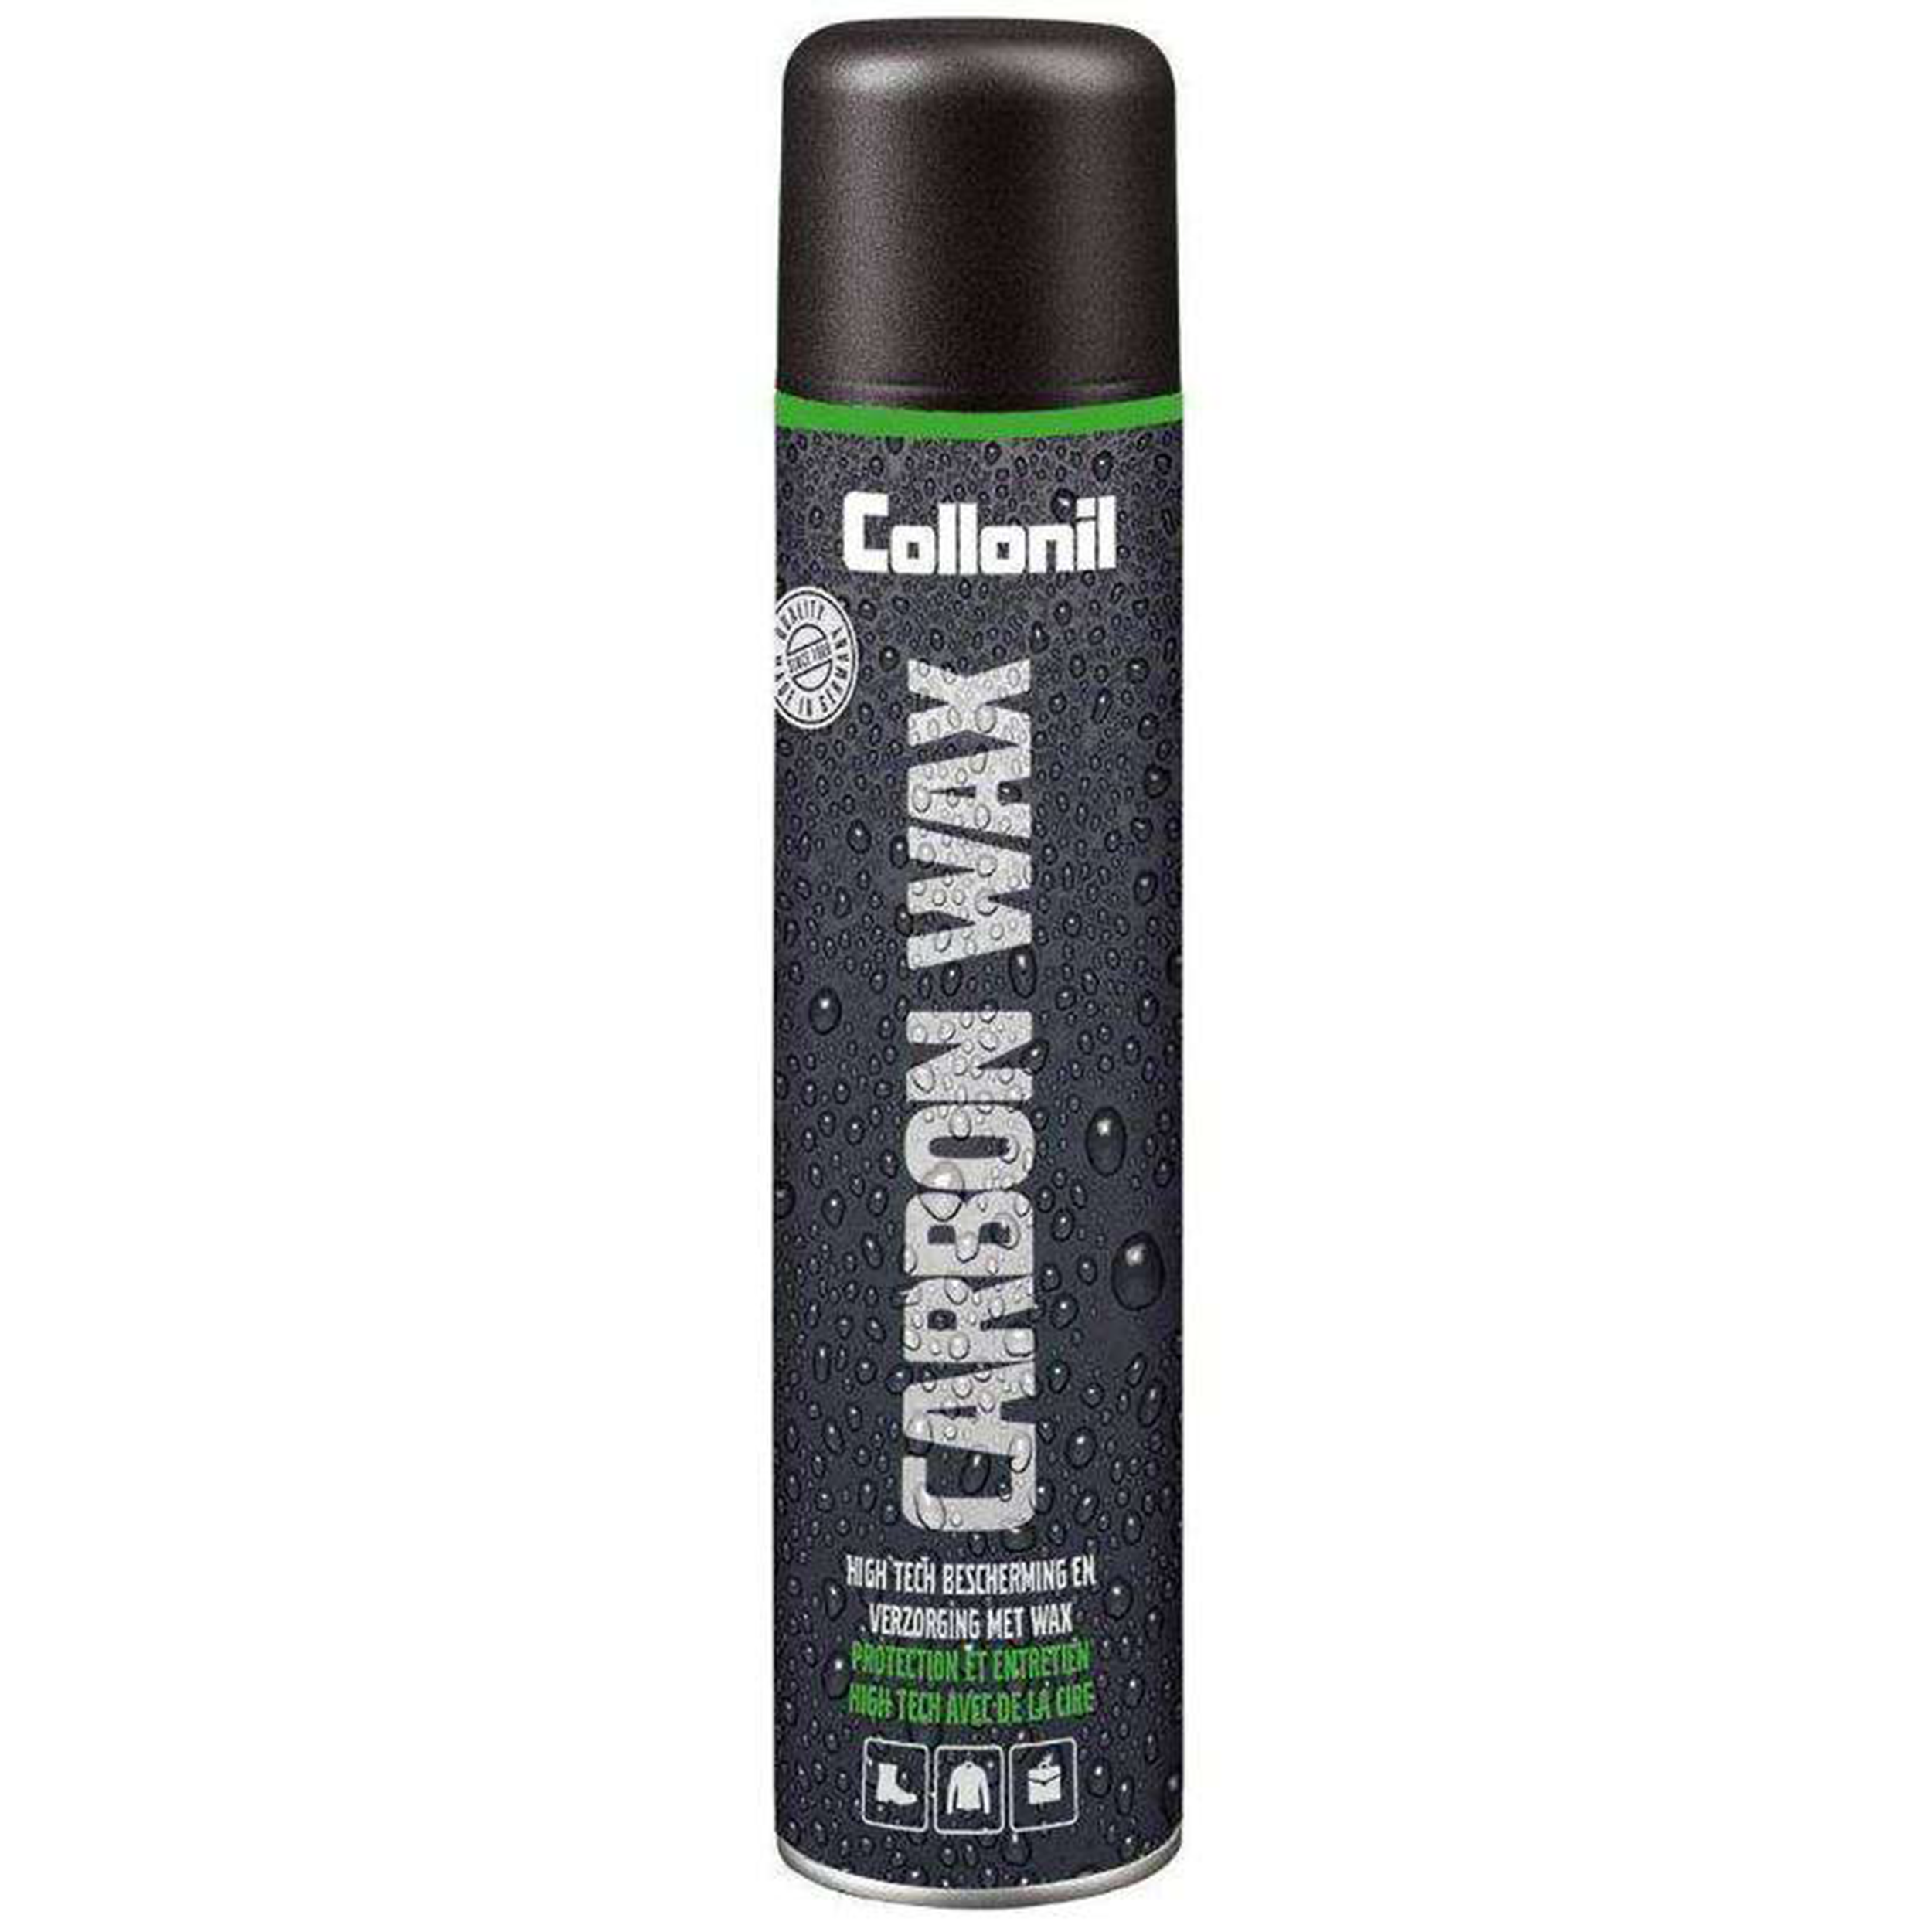 Collonil Carbon wax spray 300 ml